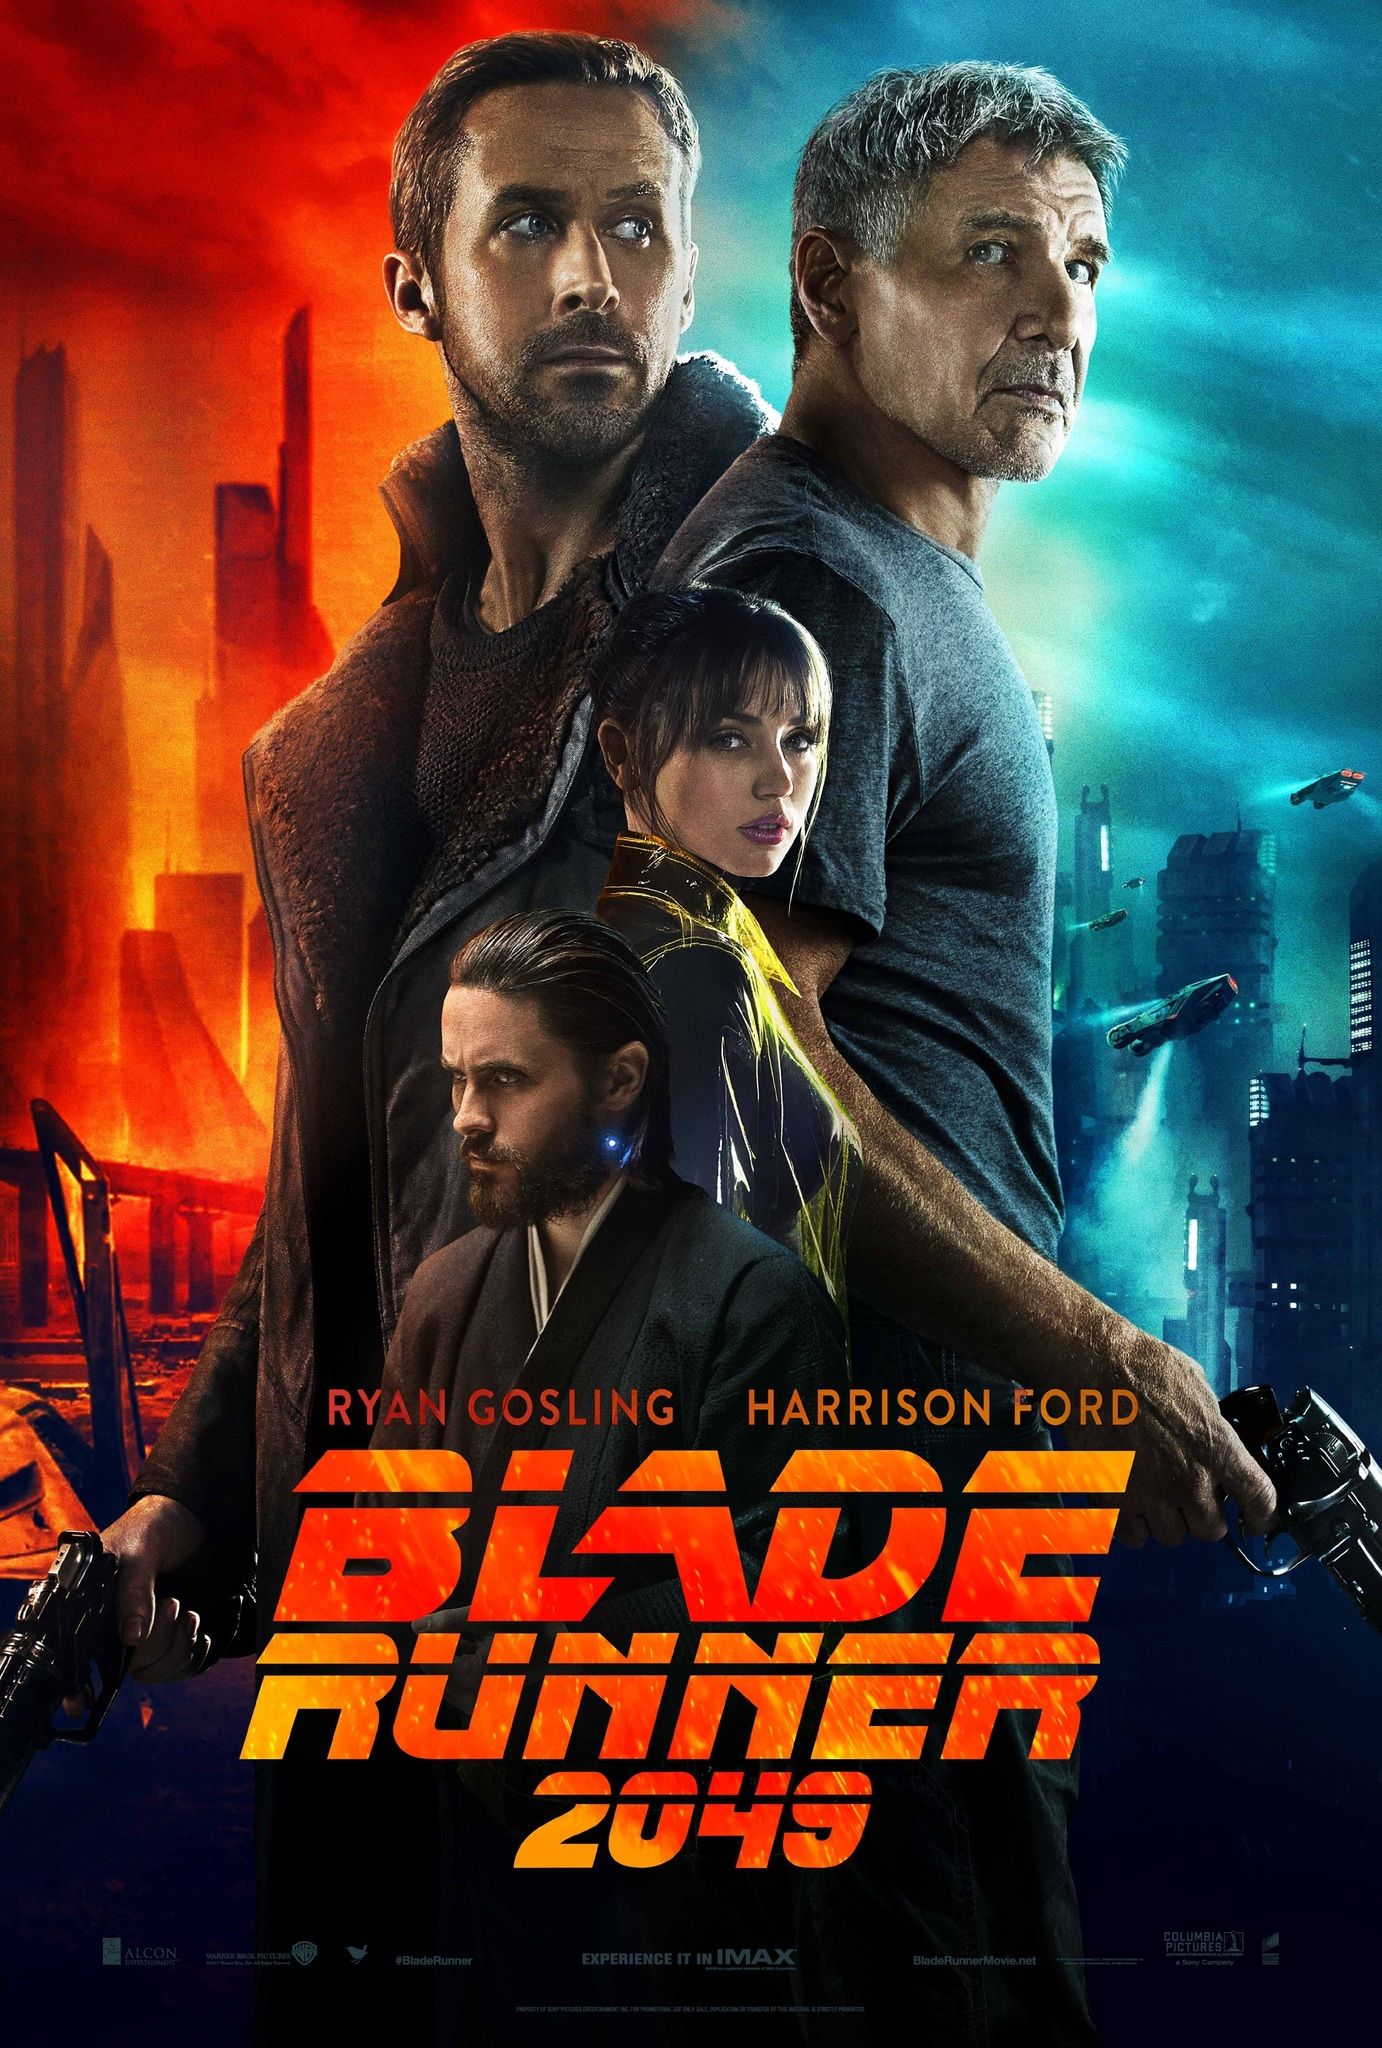 Blade Runner 2049 (2017) Hindi Dubbed Movie